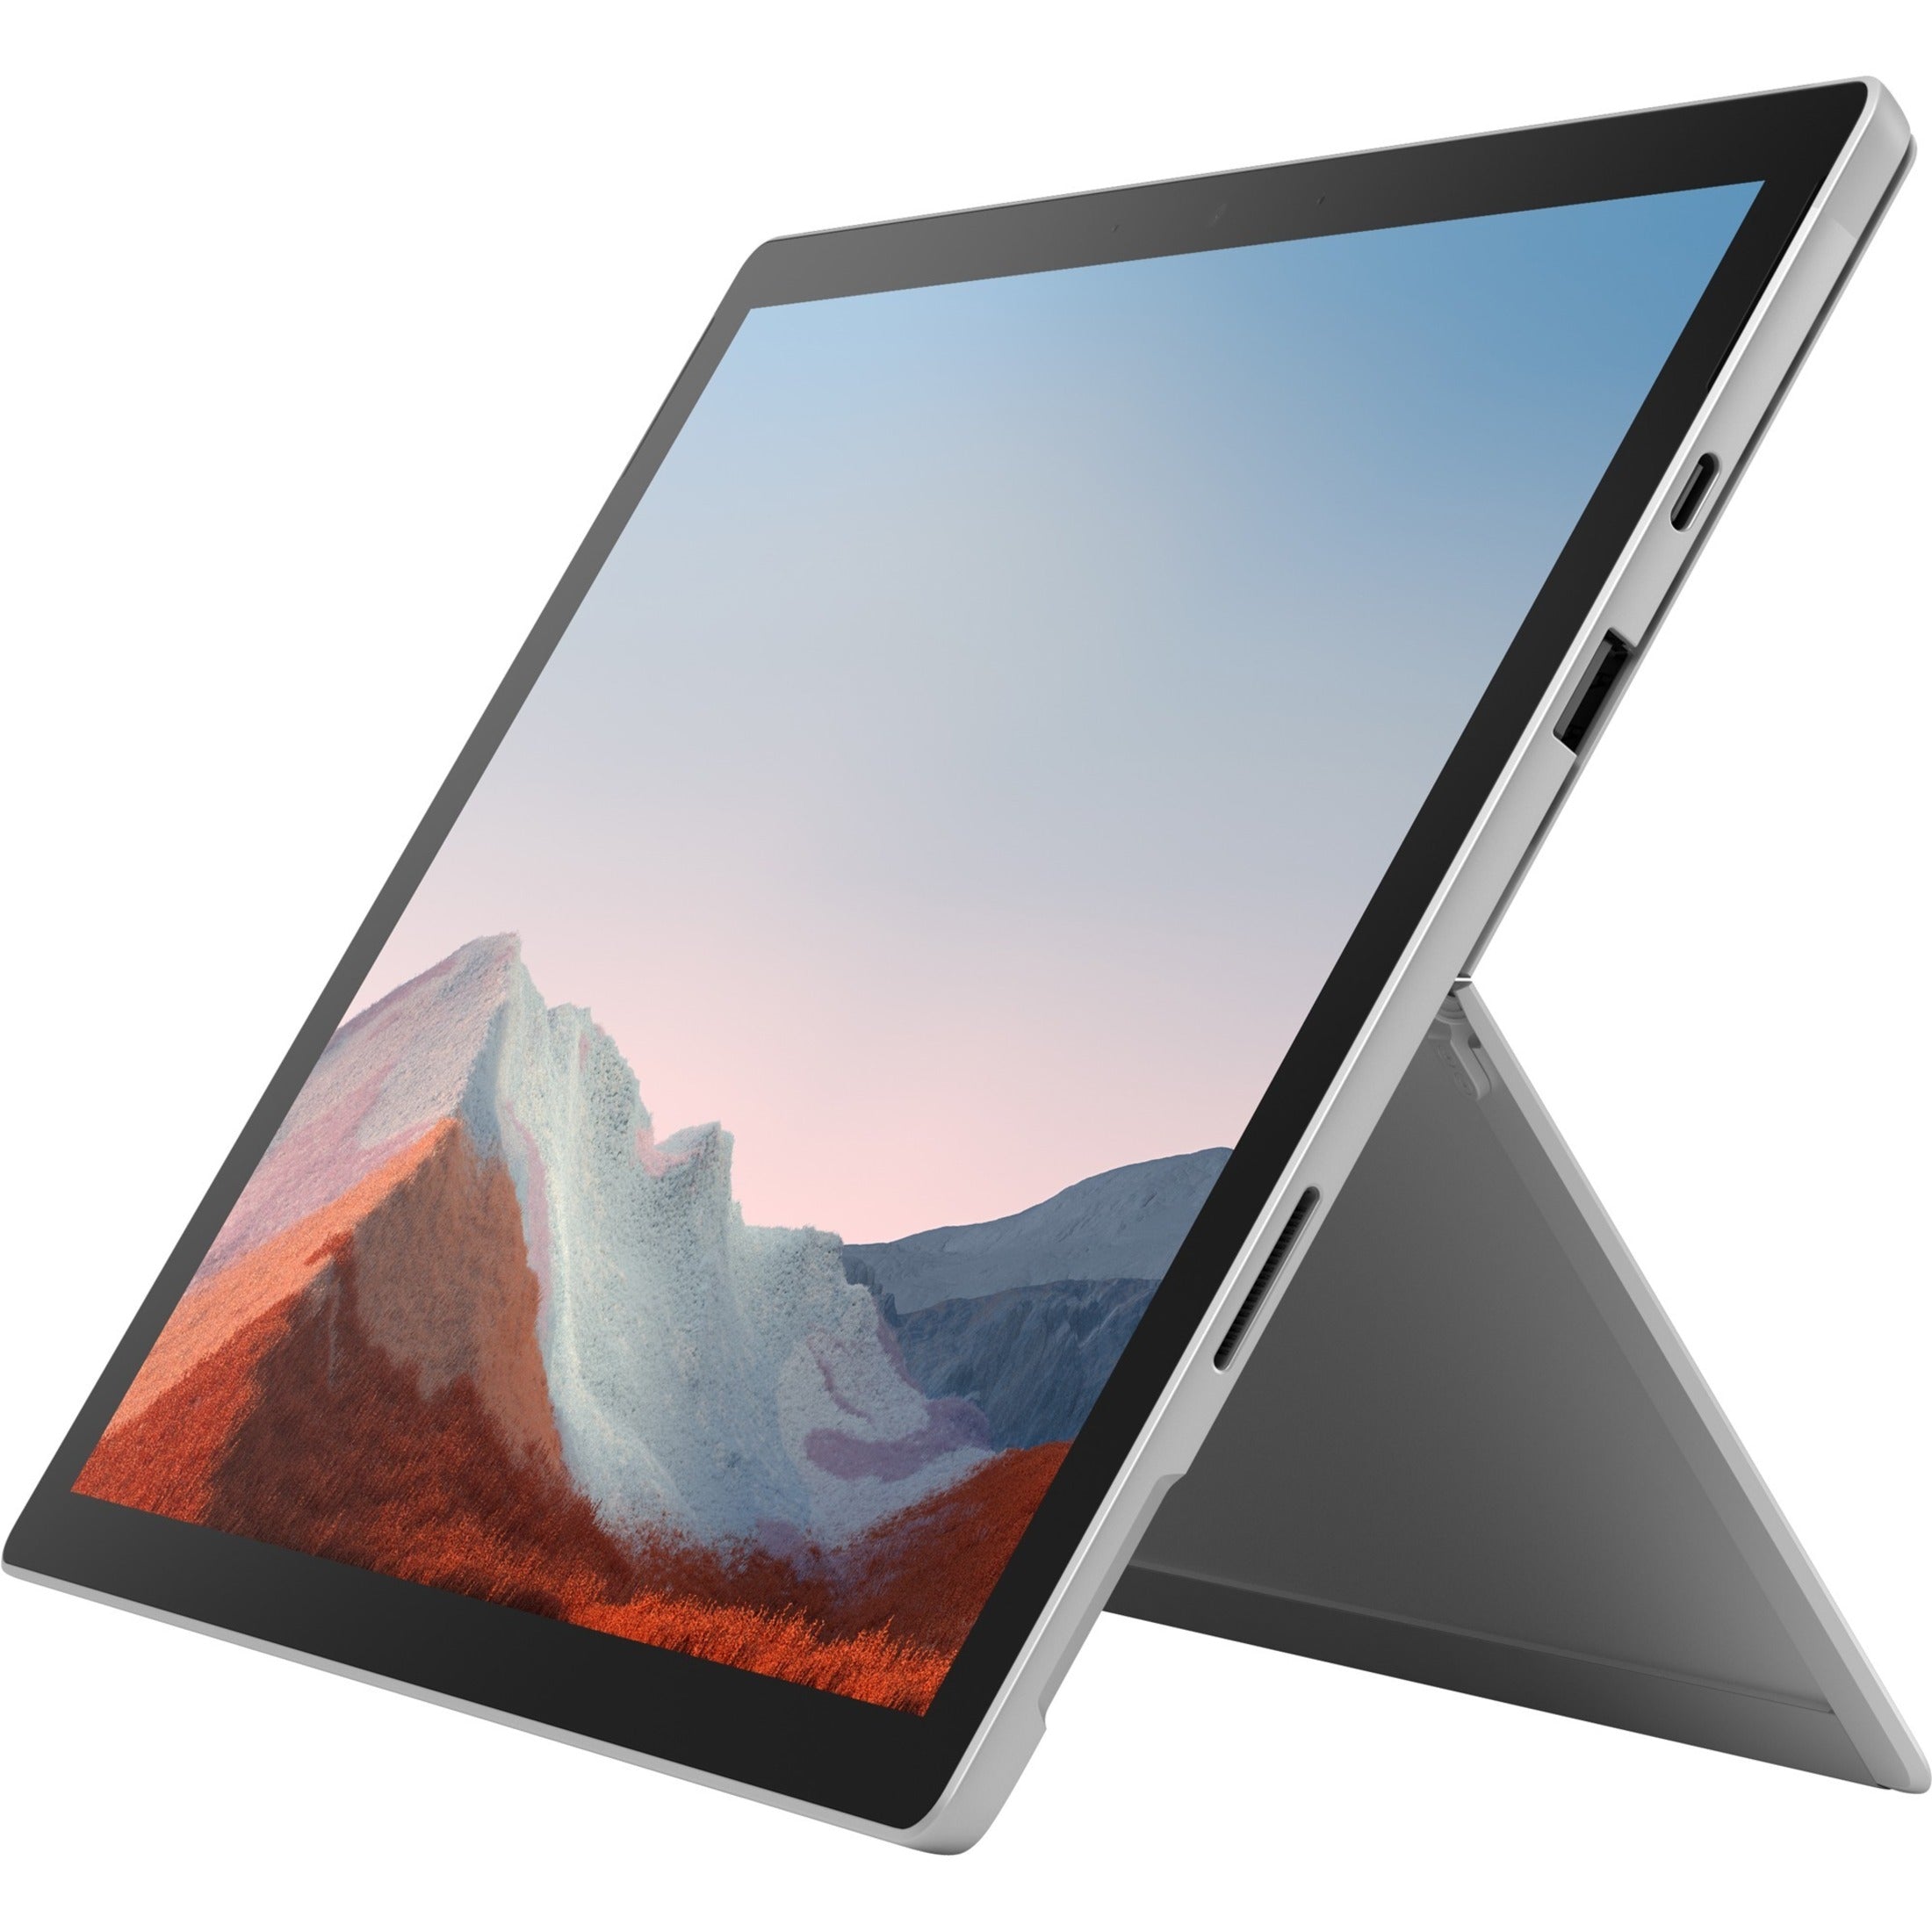 Microsoft 1XX-00001 Surface Pro 7+ Tablet, 12.3 PixelSense Display, Core i5, 8GB RAM, 256GB SSD, Windows 10 Pro